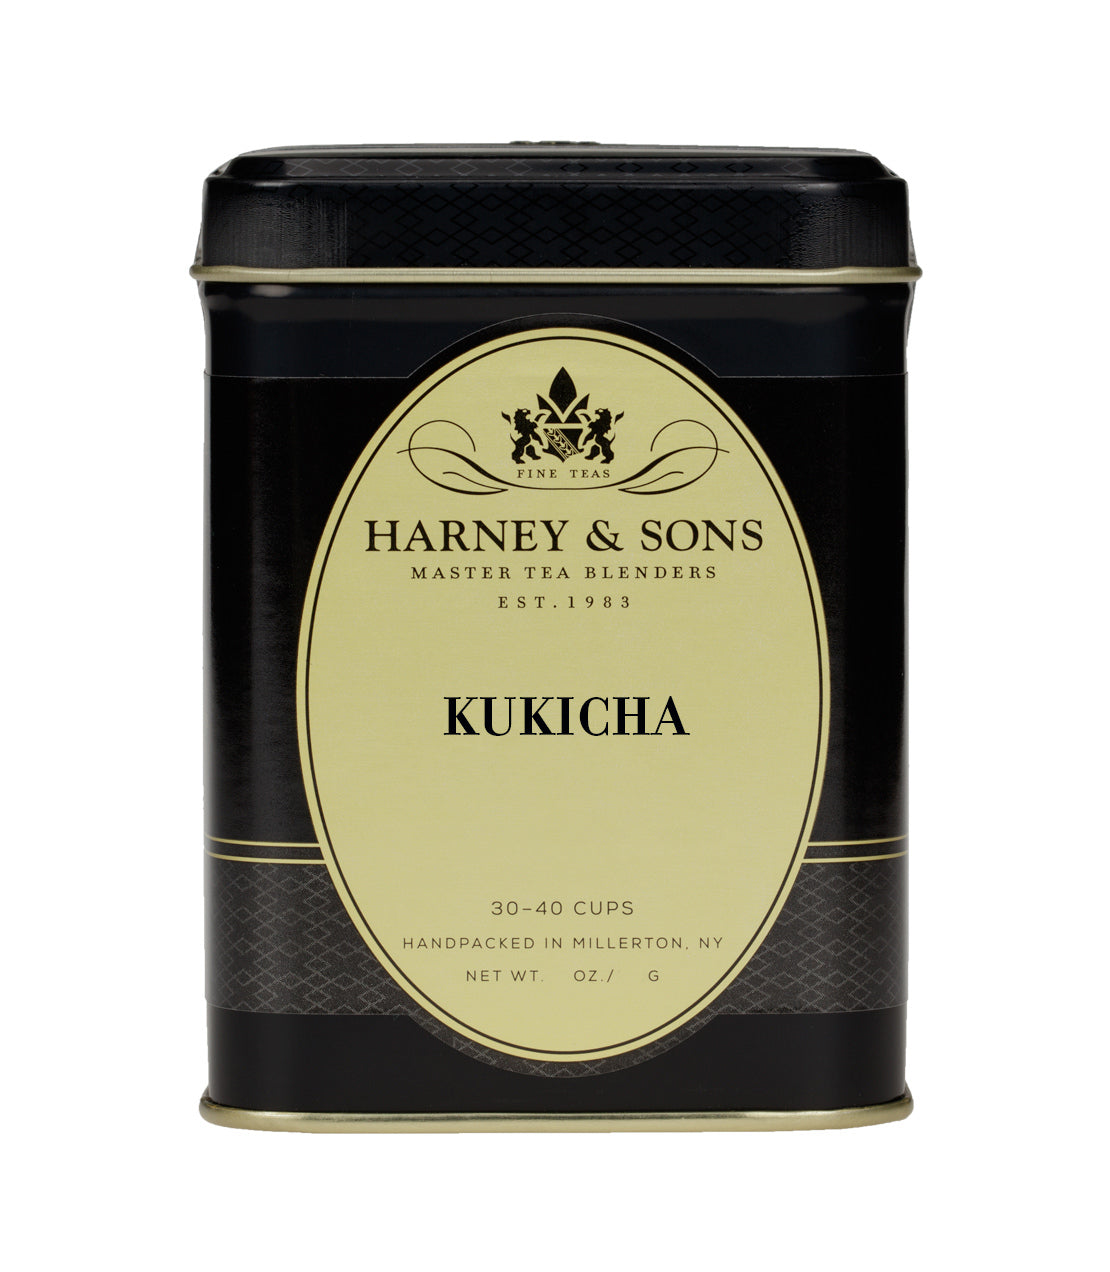 Kukicha - Loose 4 oz. Tin - Harney & Sons Fine Teas